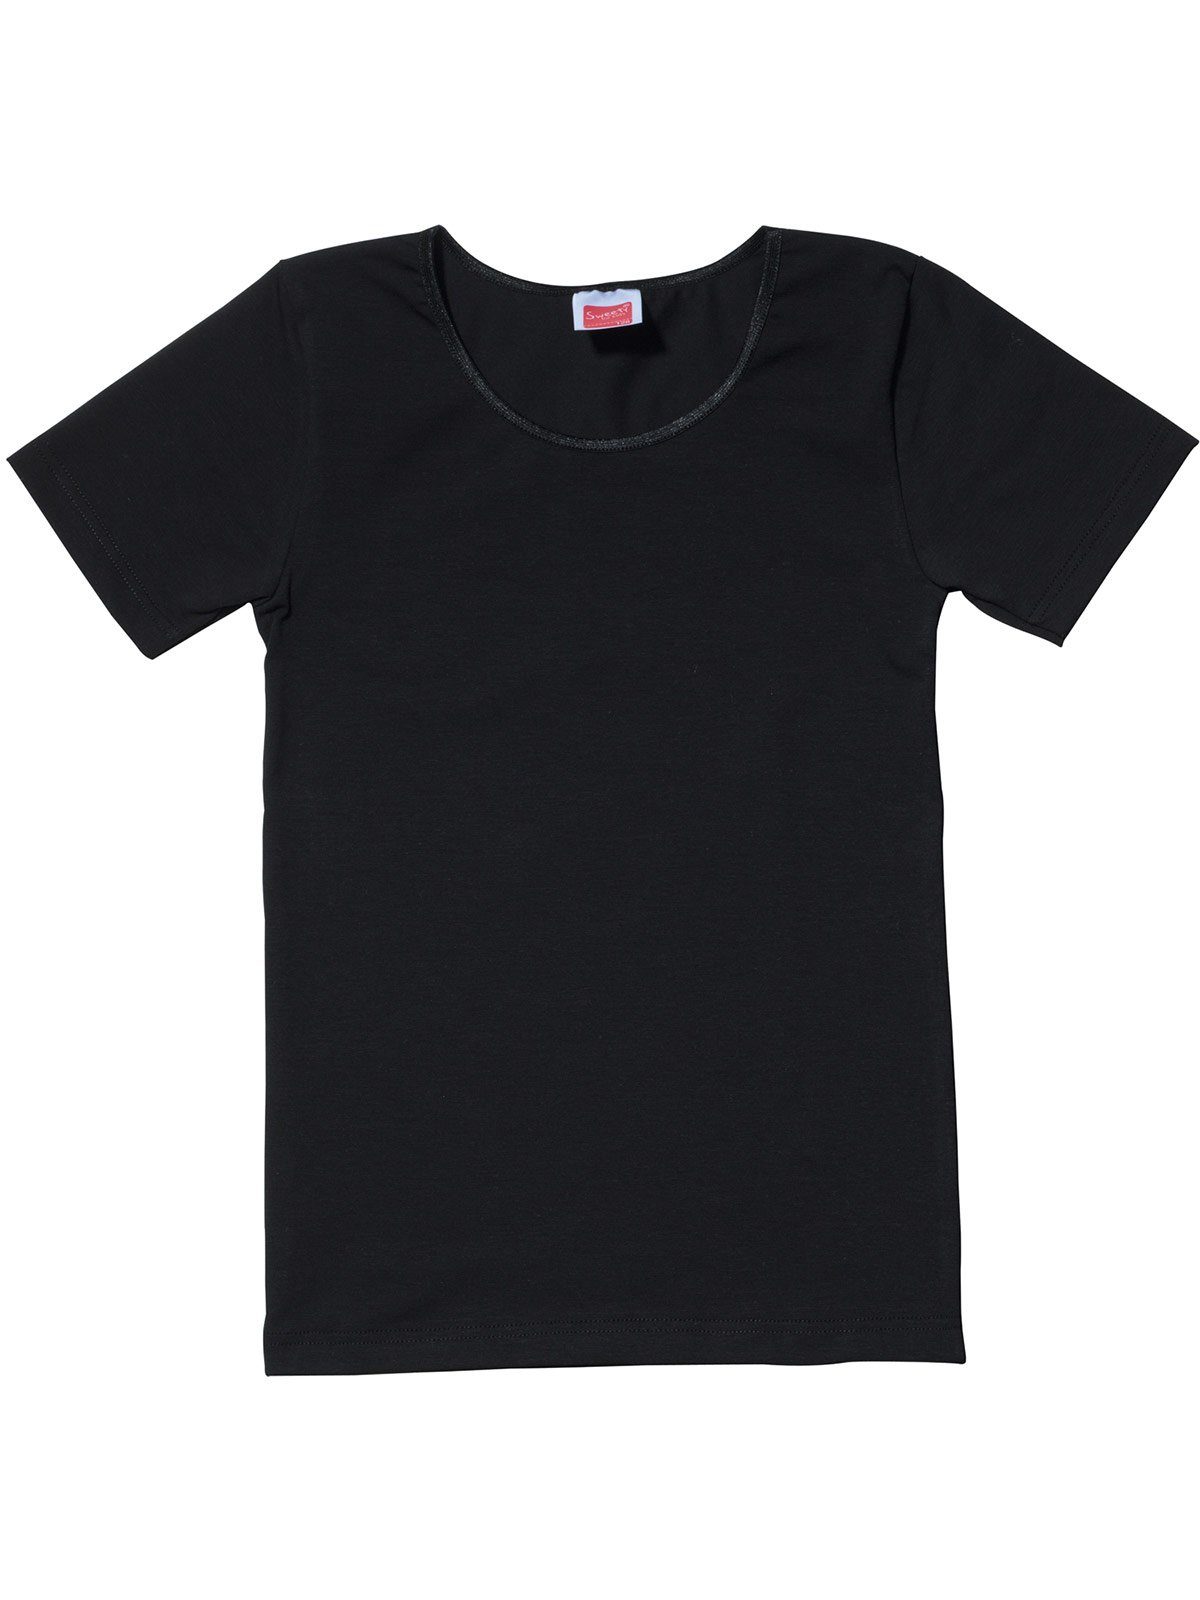 1-St) Sweety Mädchen hohe Markenqualität Single Shirt Jersey Kids for (Stück, Unterhemd